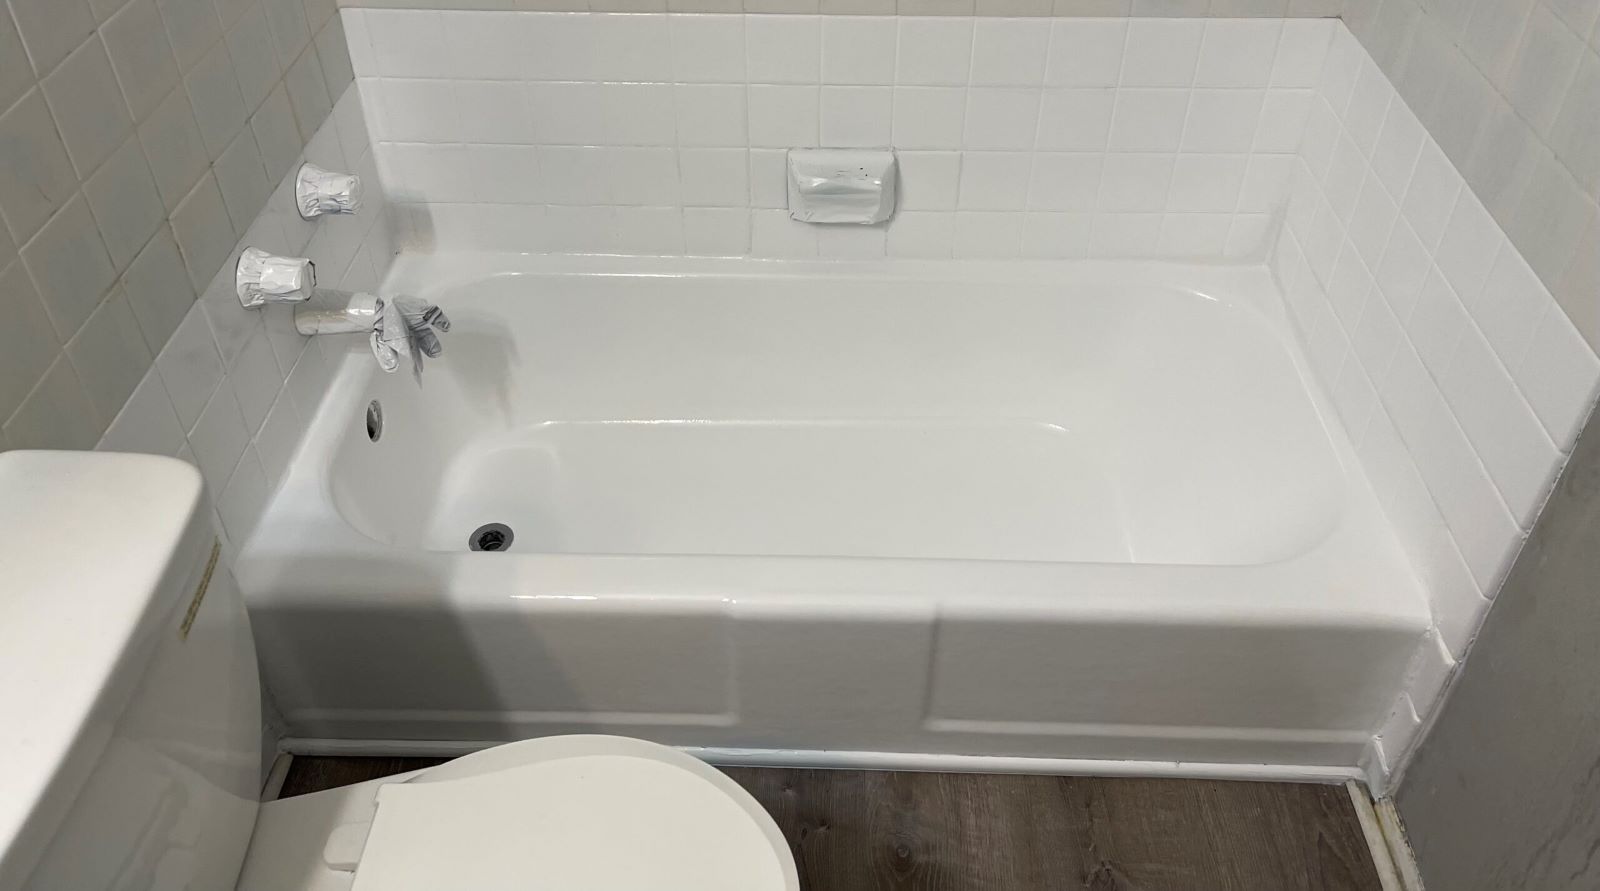 Low Cost Bathtub Refinishing in Wildwood, MO | Affordable Tub Reglazing Near Wildwood